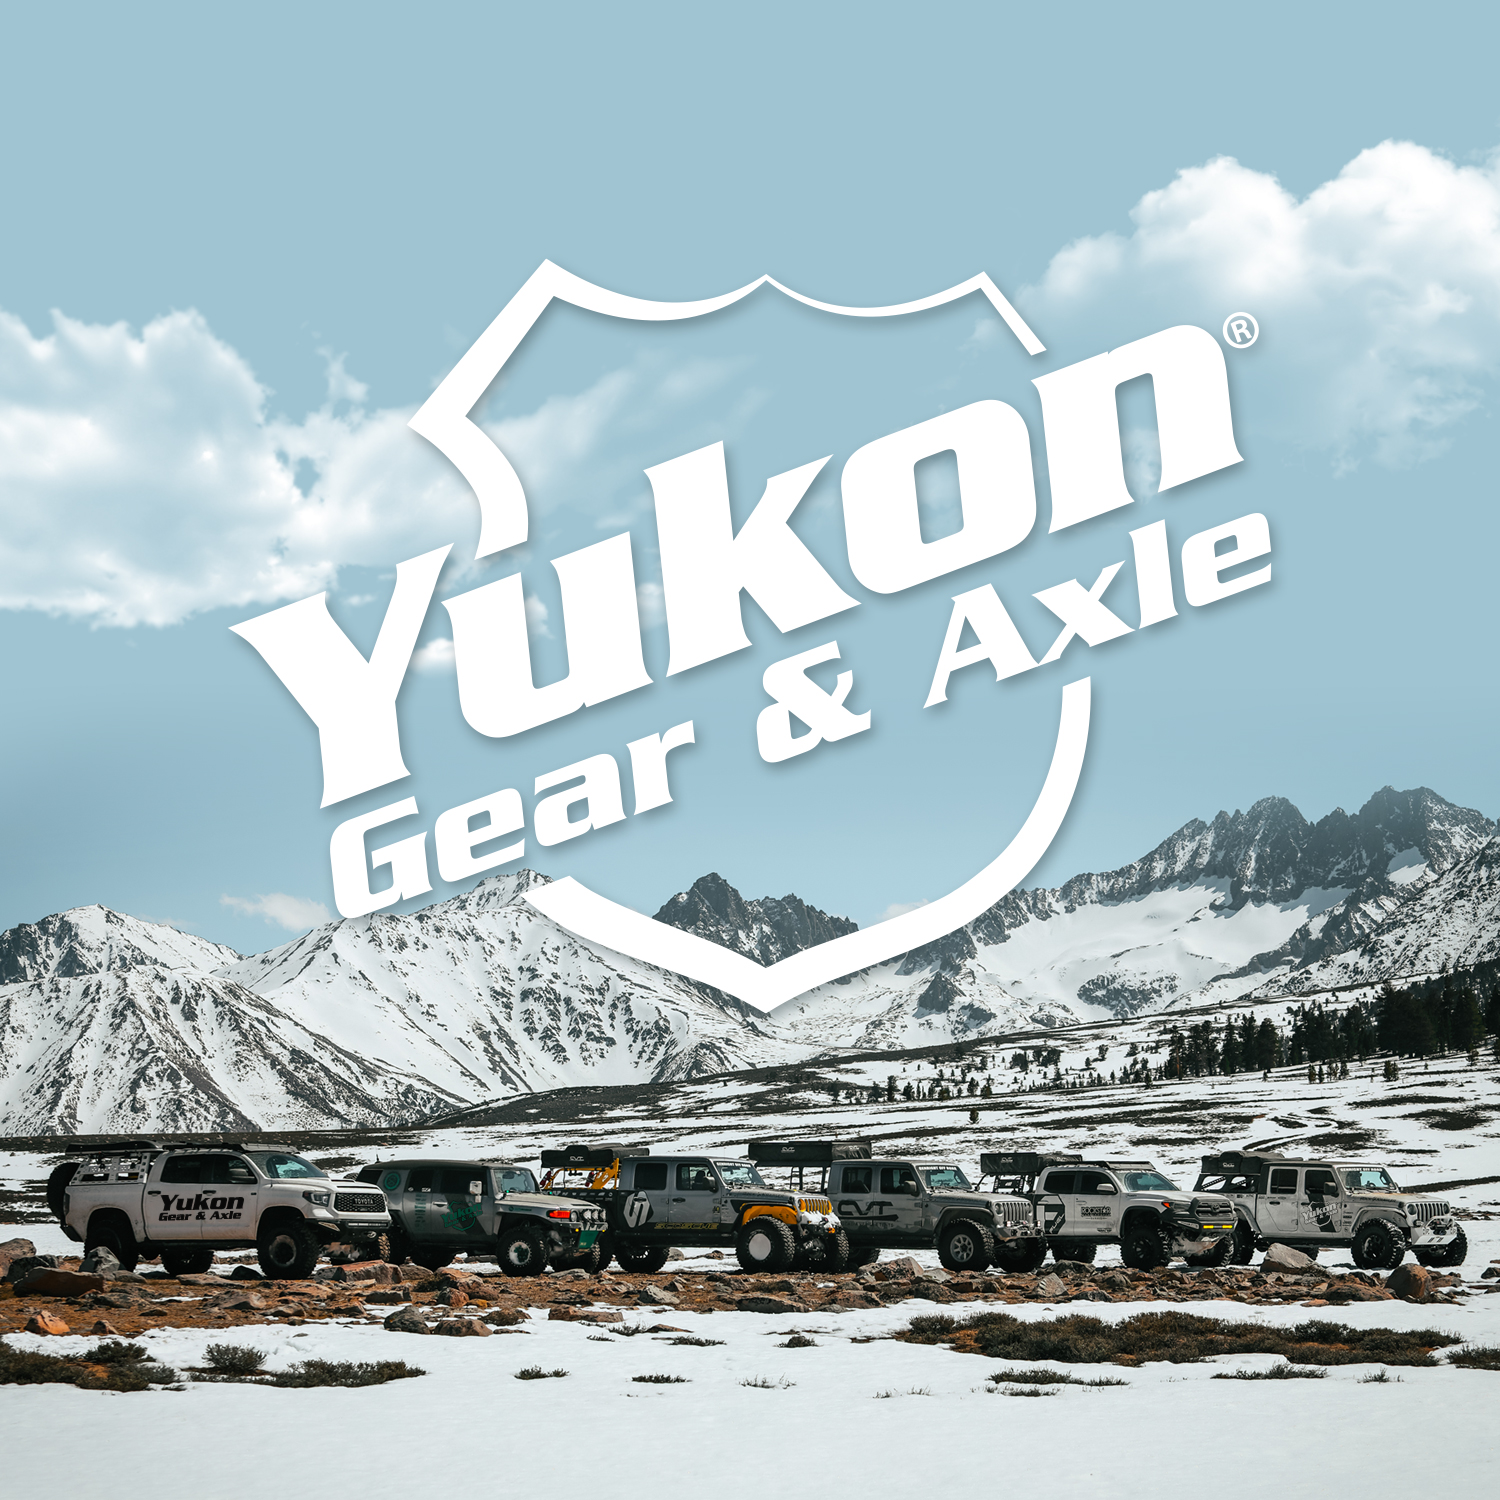 Yukon Gear & Axle Master Overhaul Kit for Various General Motors 8.25" IFS 